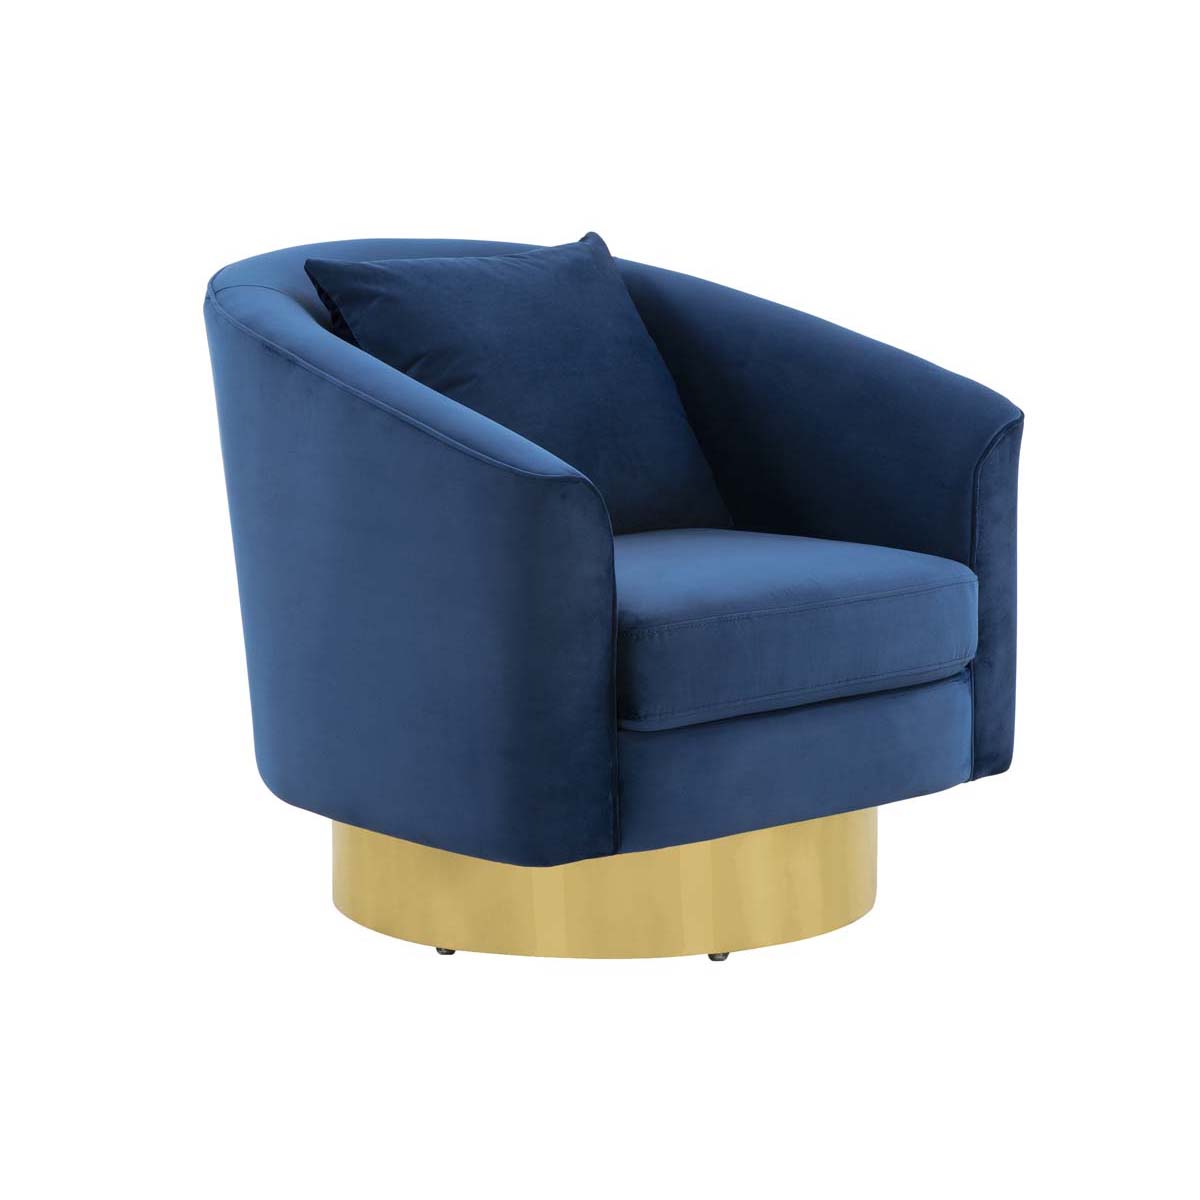 Safavieh Couture Joaquin Swivel Barrel Chair